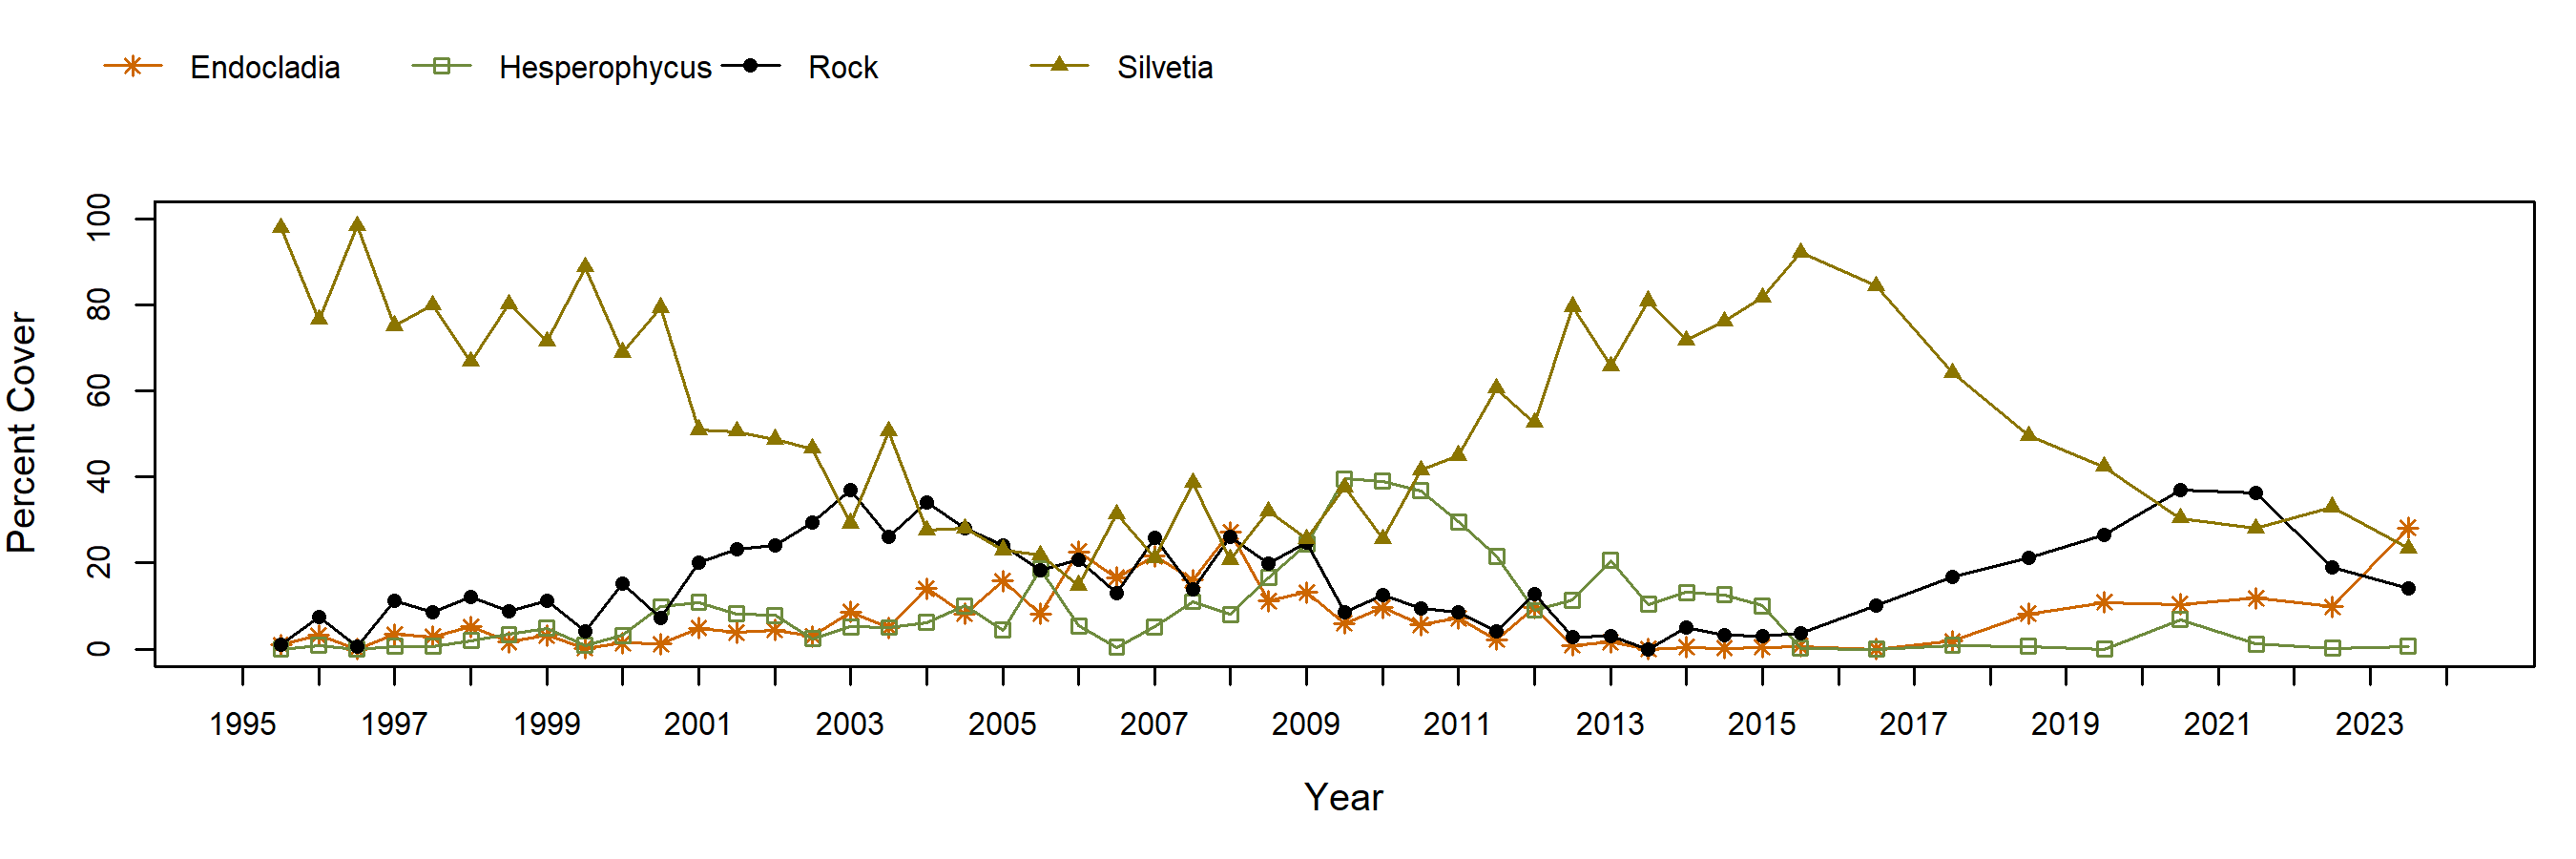 Cayucos Silvetia trend plot